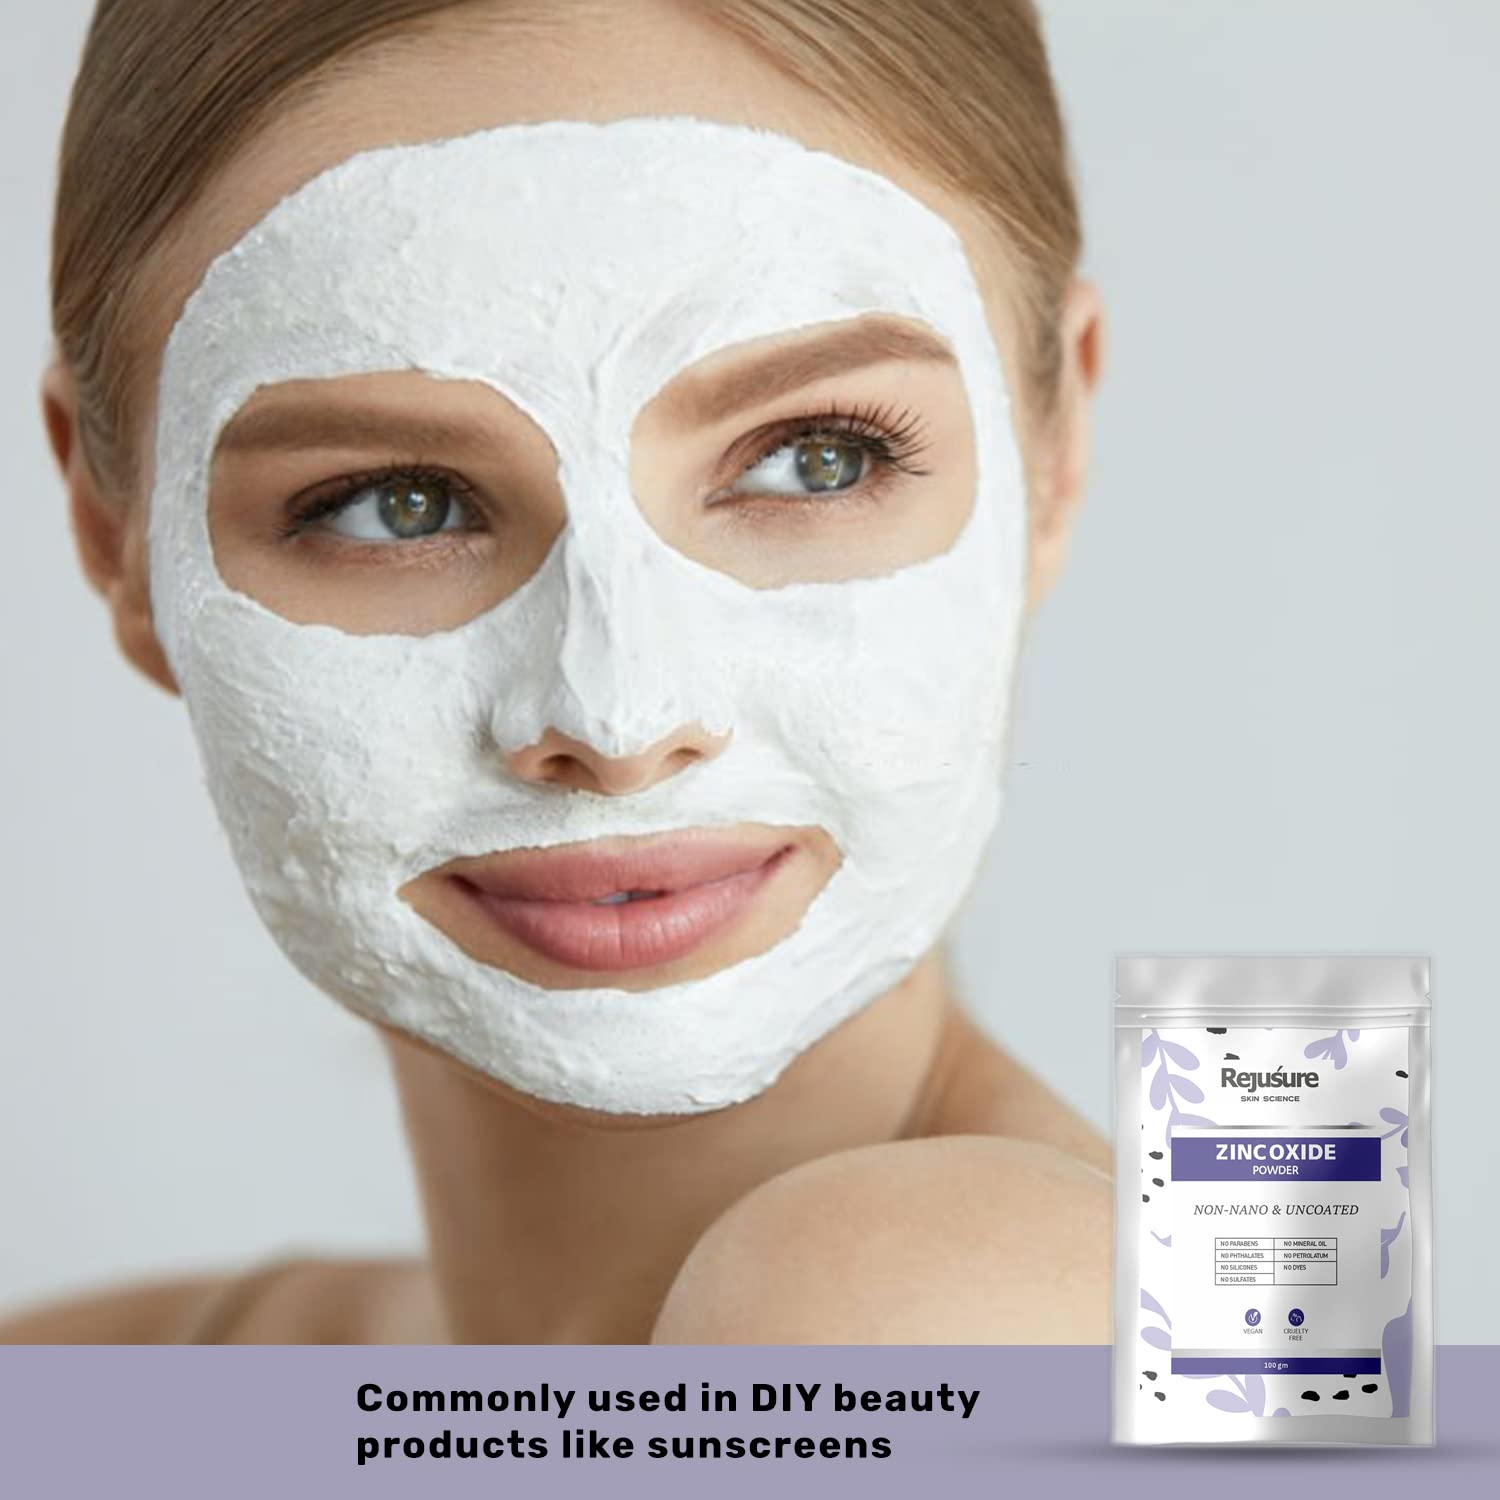 Rejusure Zinc Oxide Powder Improves Skin Texture & Prevent the Skin from Sunburn, Zinc Oxide Powder for Face, Non Nano & Uncoated for DIY – 100 gm